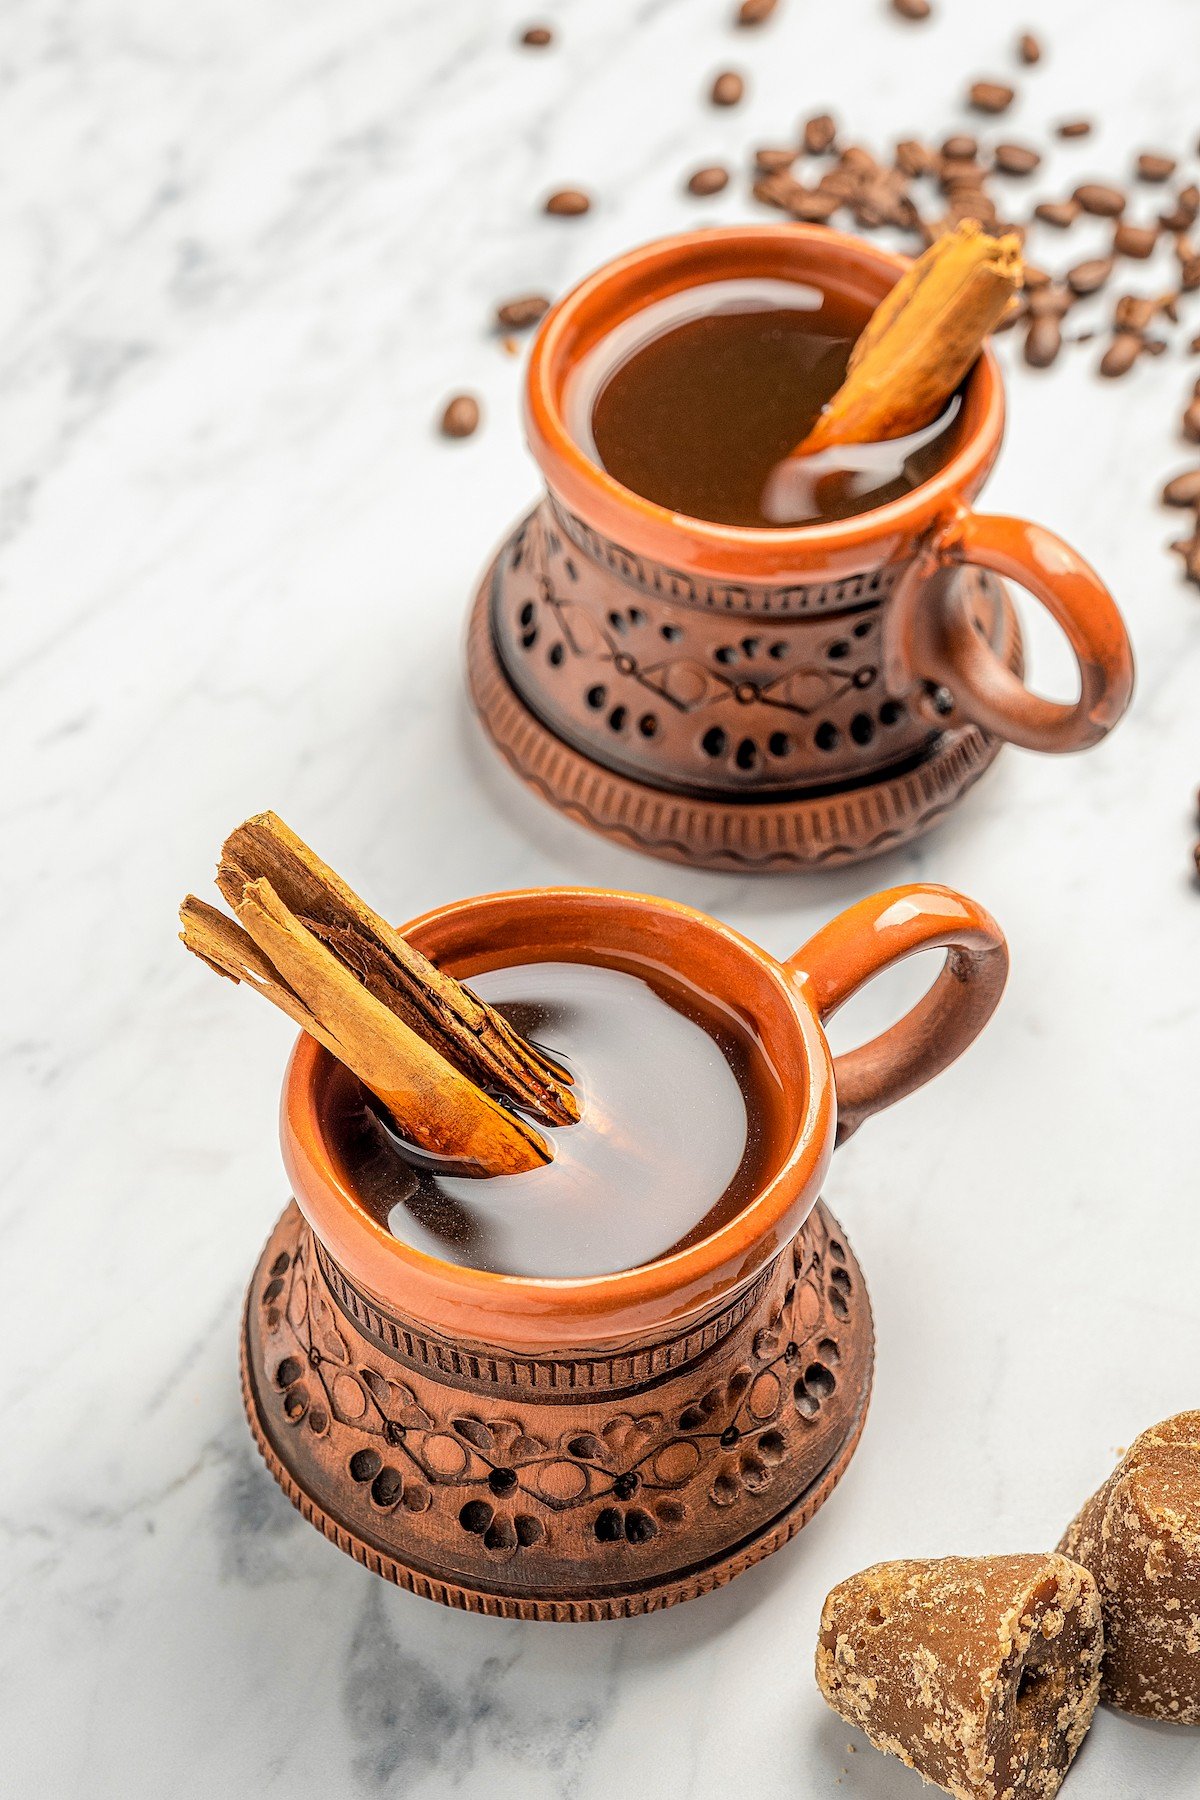 Two clay mugs full of Café de Olla with cinnamon sticks.